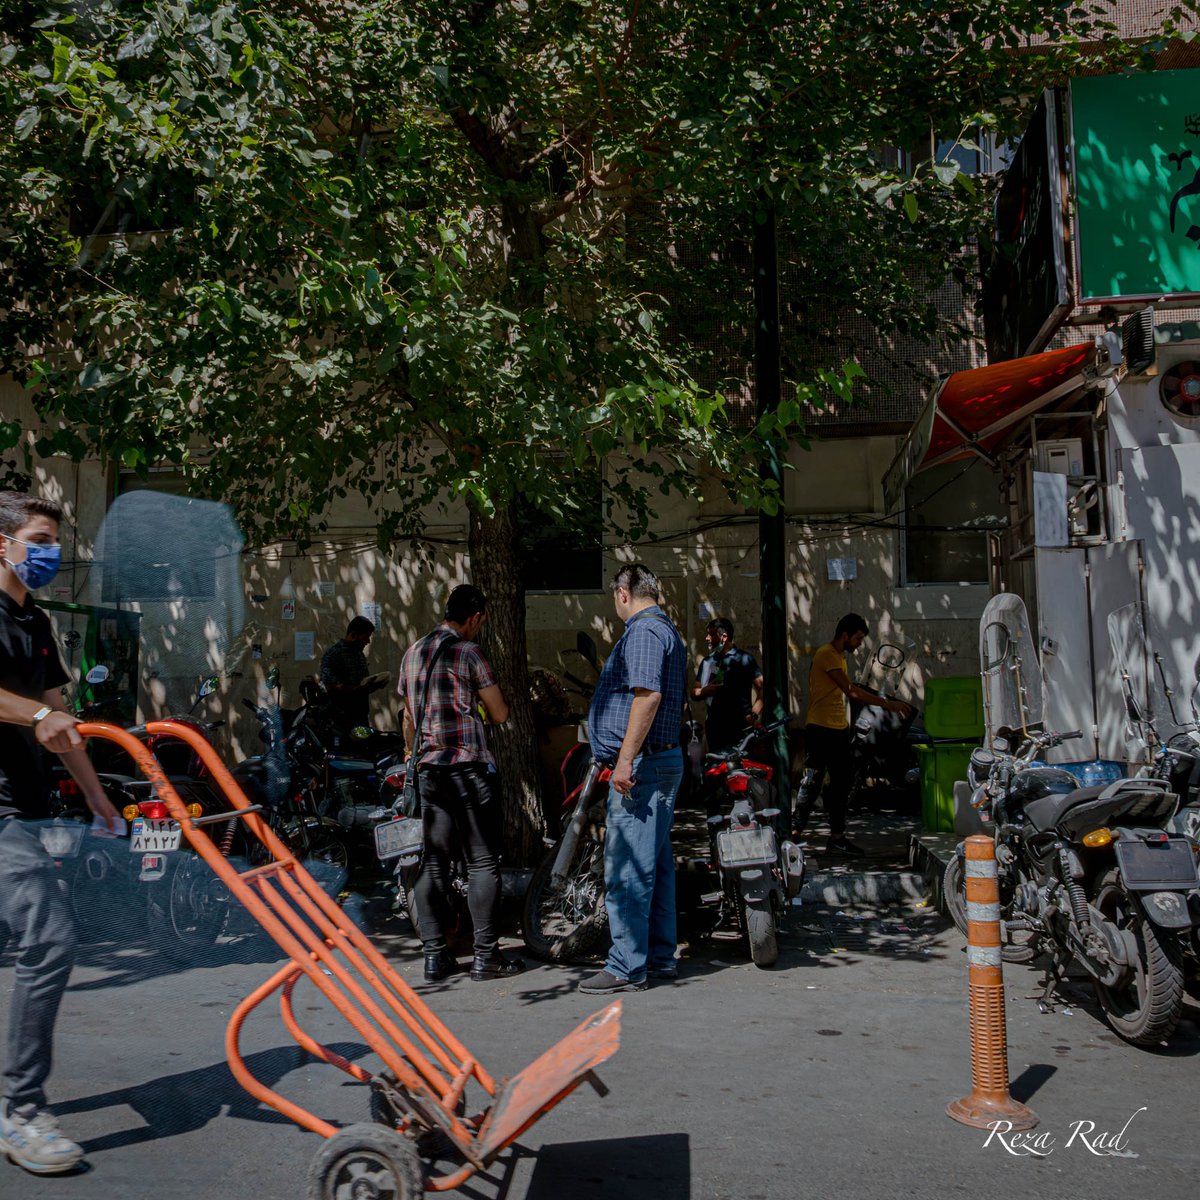 Streets of Tehran! 
#StreetPhotography #Tehran #StreetStories